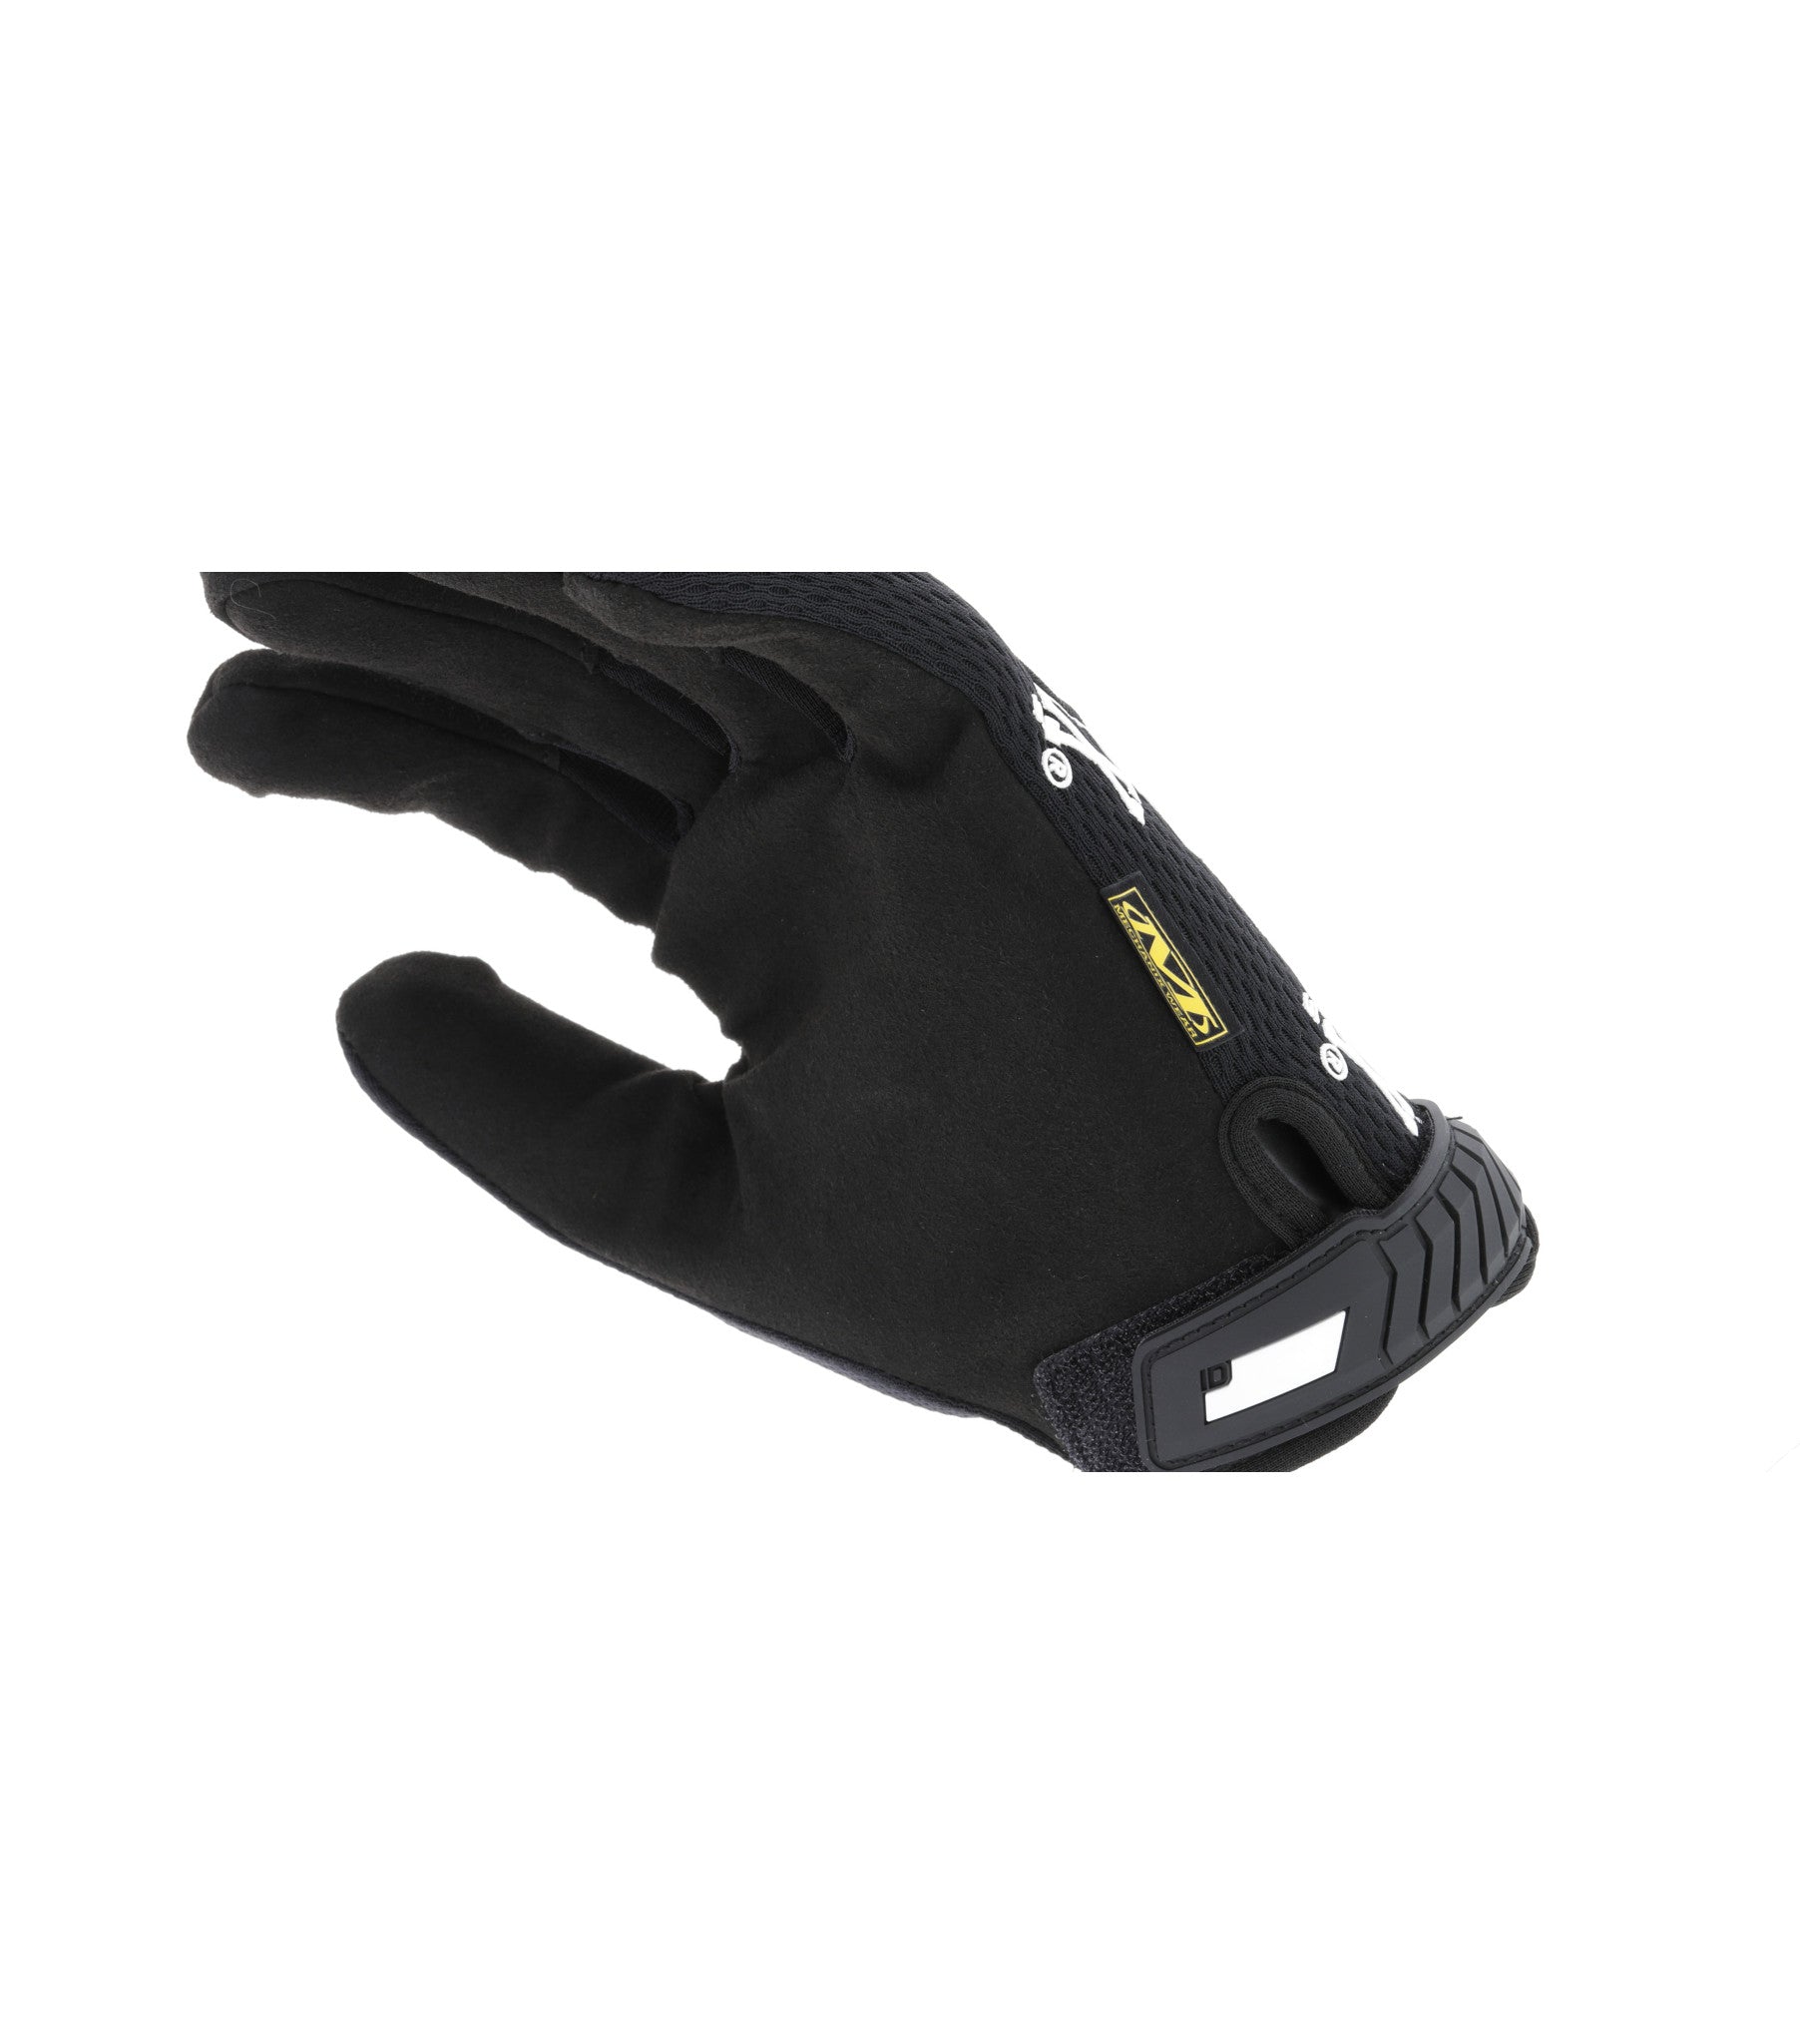 Mechanix Wear The Original Glove (Black)